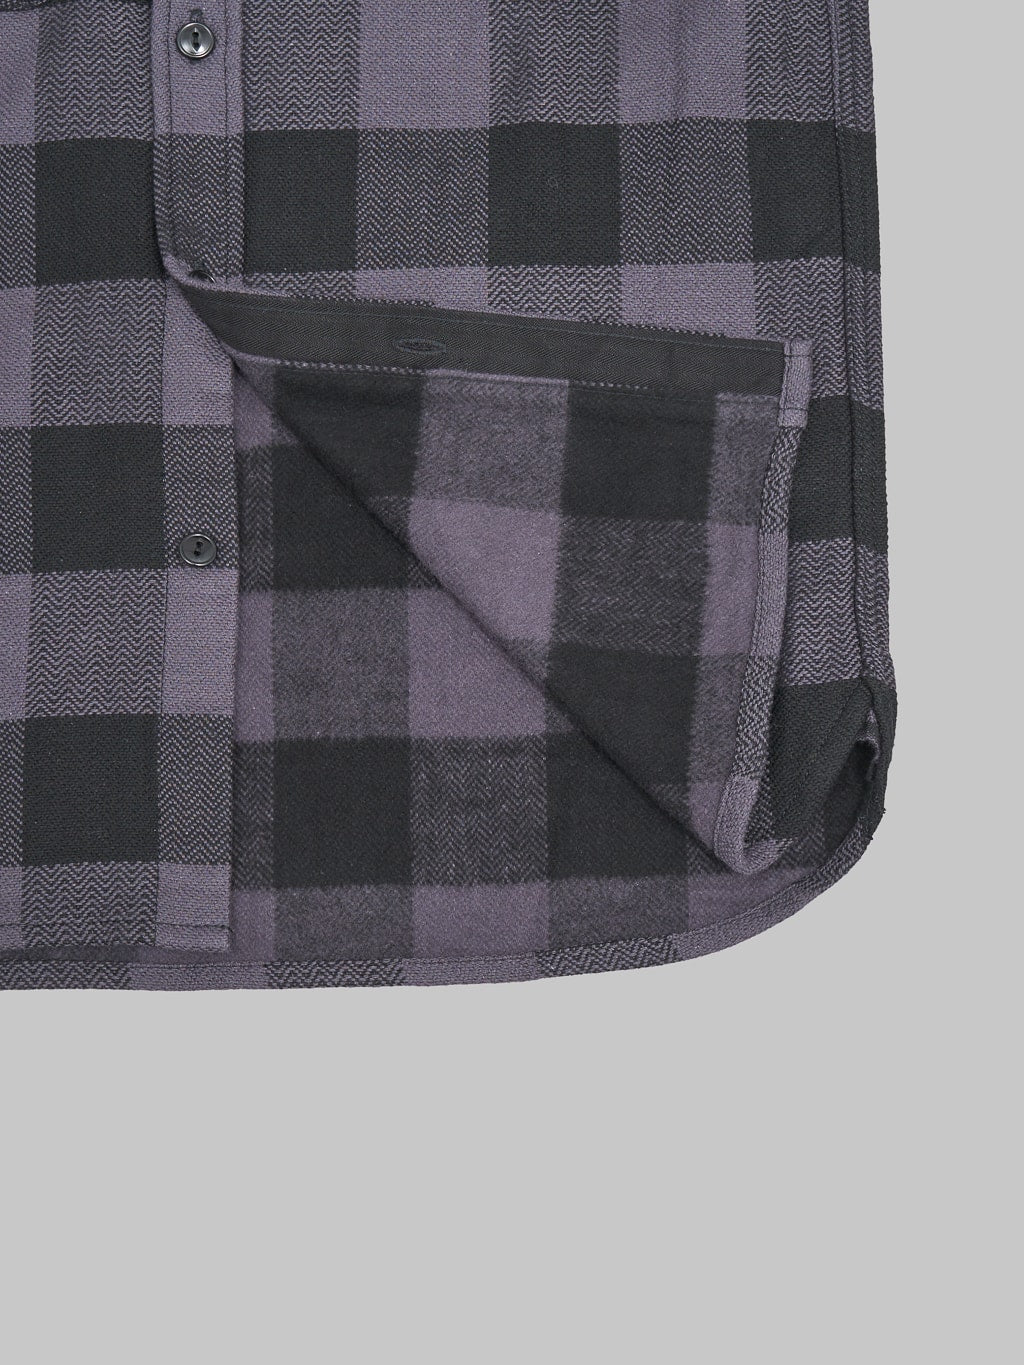 The Flat Head Block Check Flannel Shirt Grey interior texture